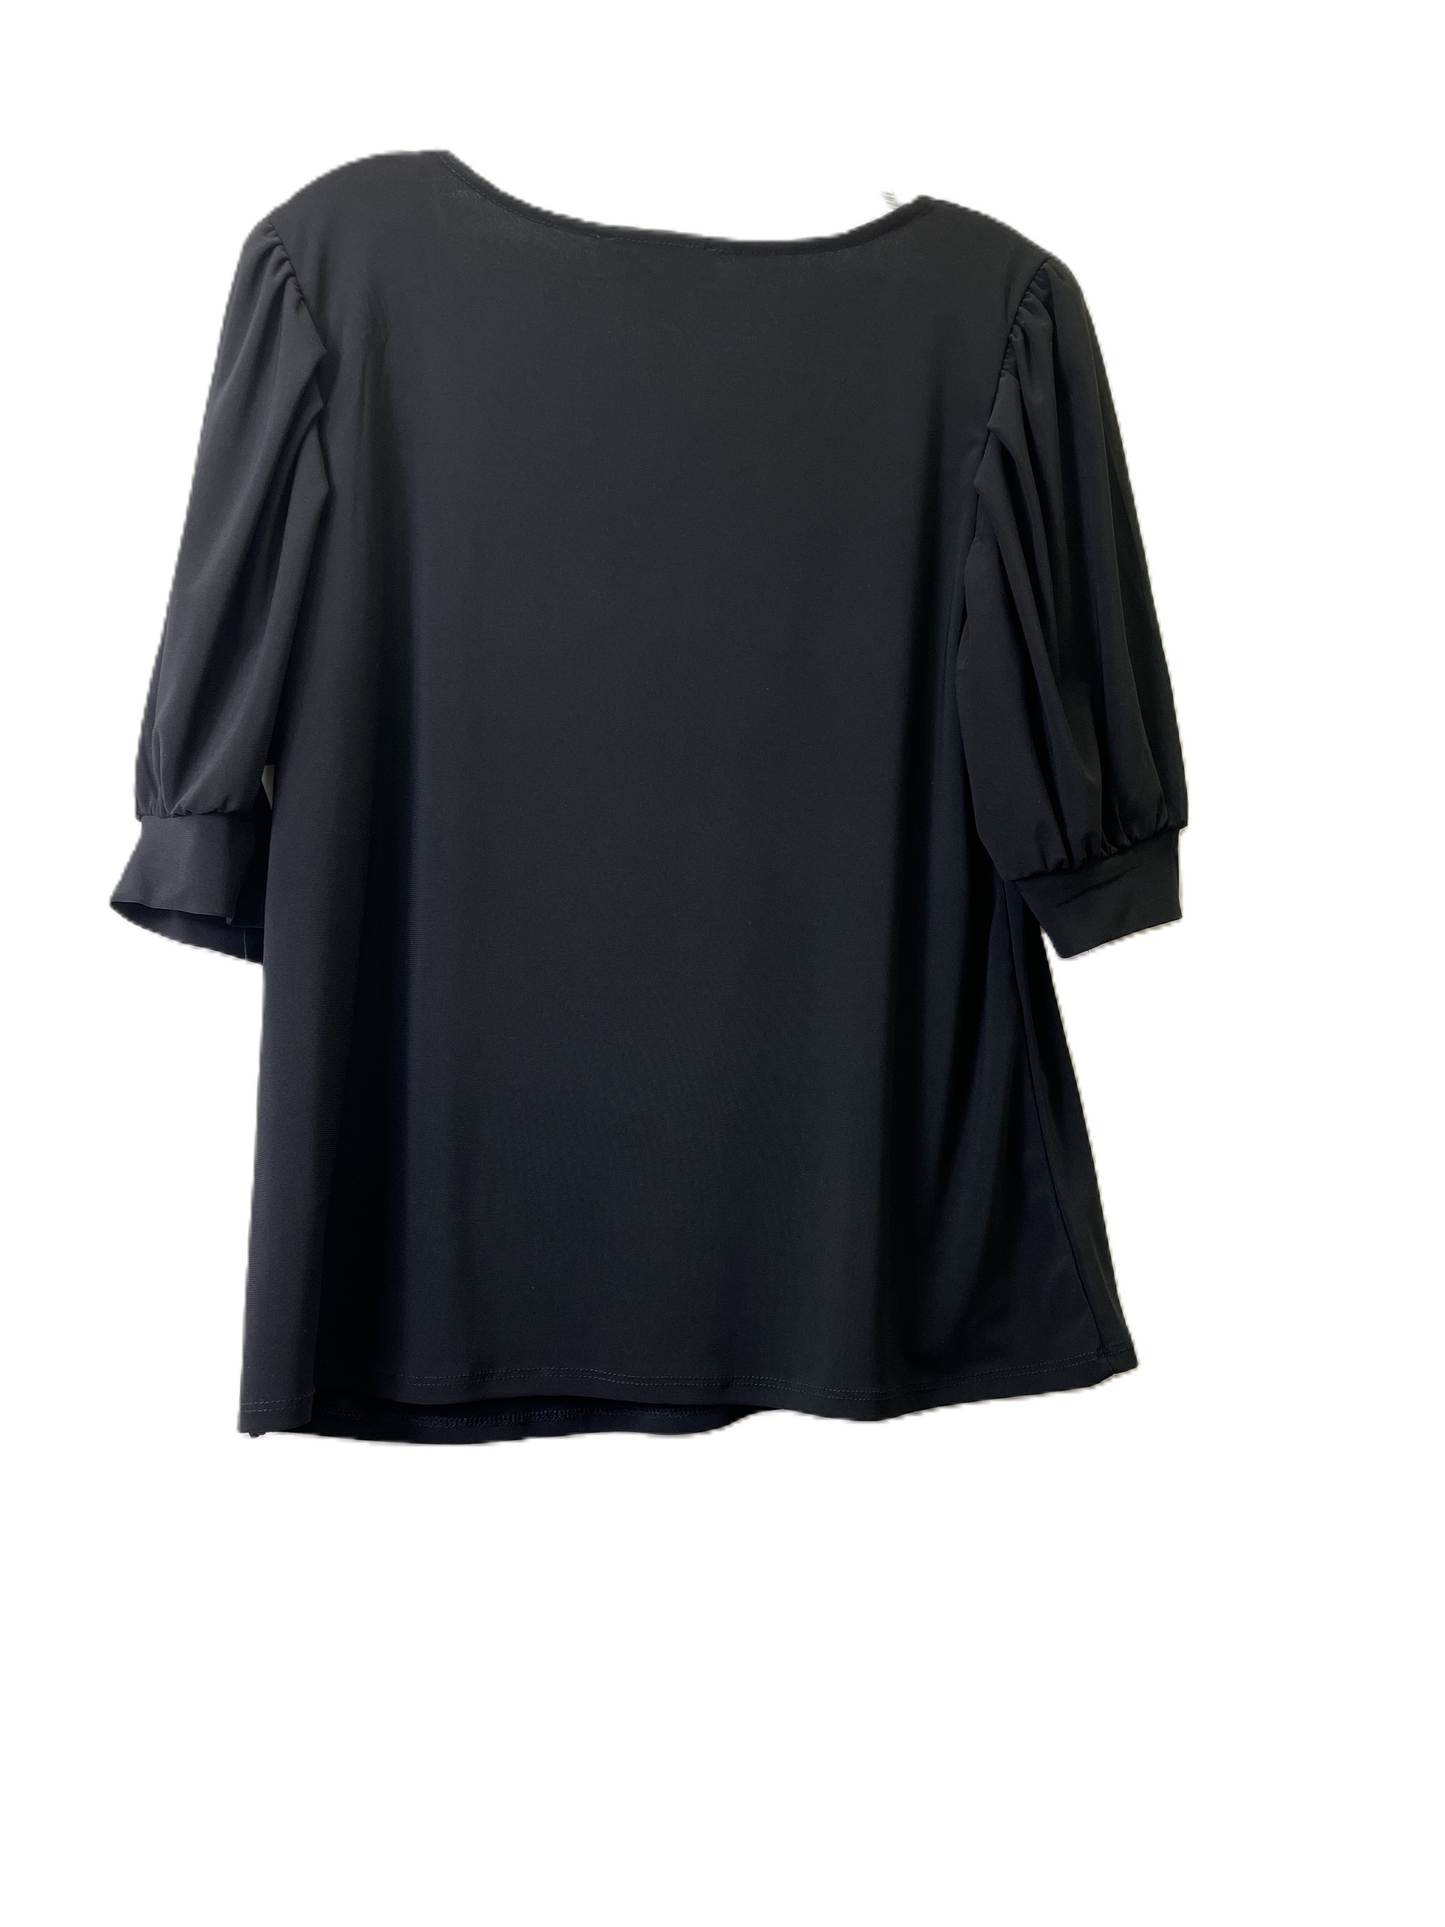 Black Top Short Sleeve Basic By Cece, Size: L